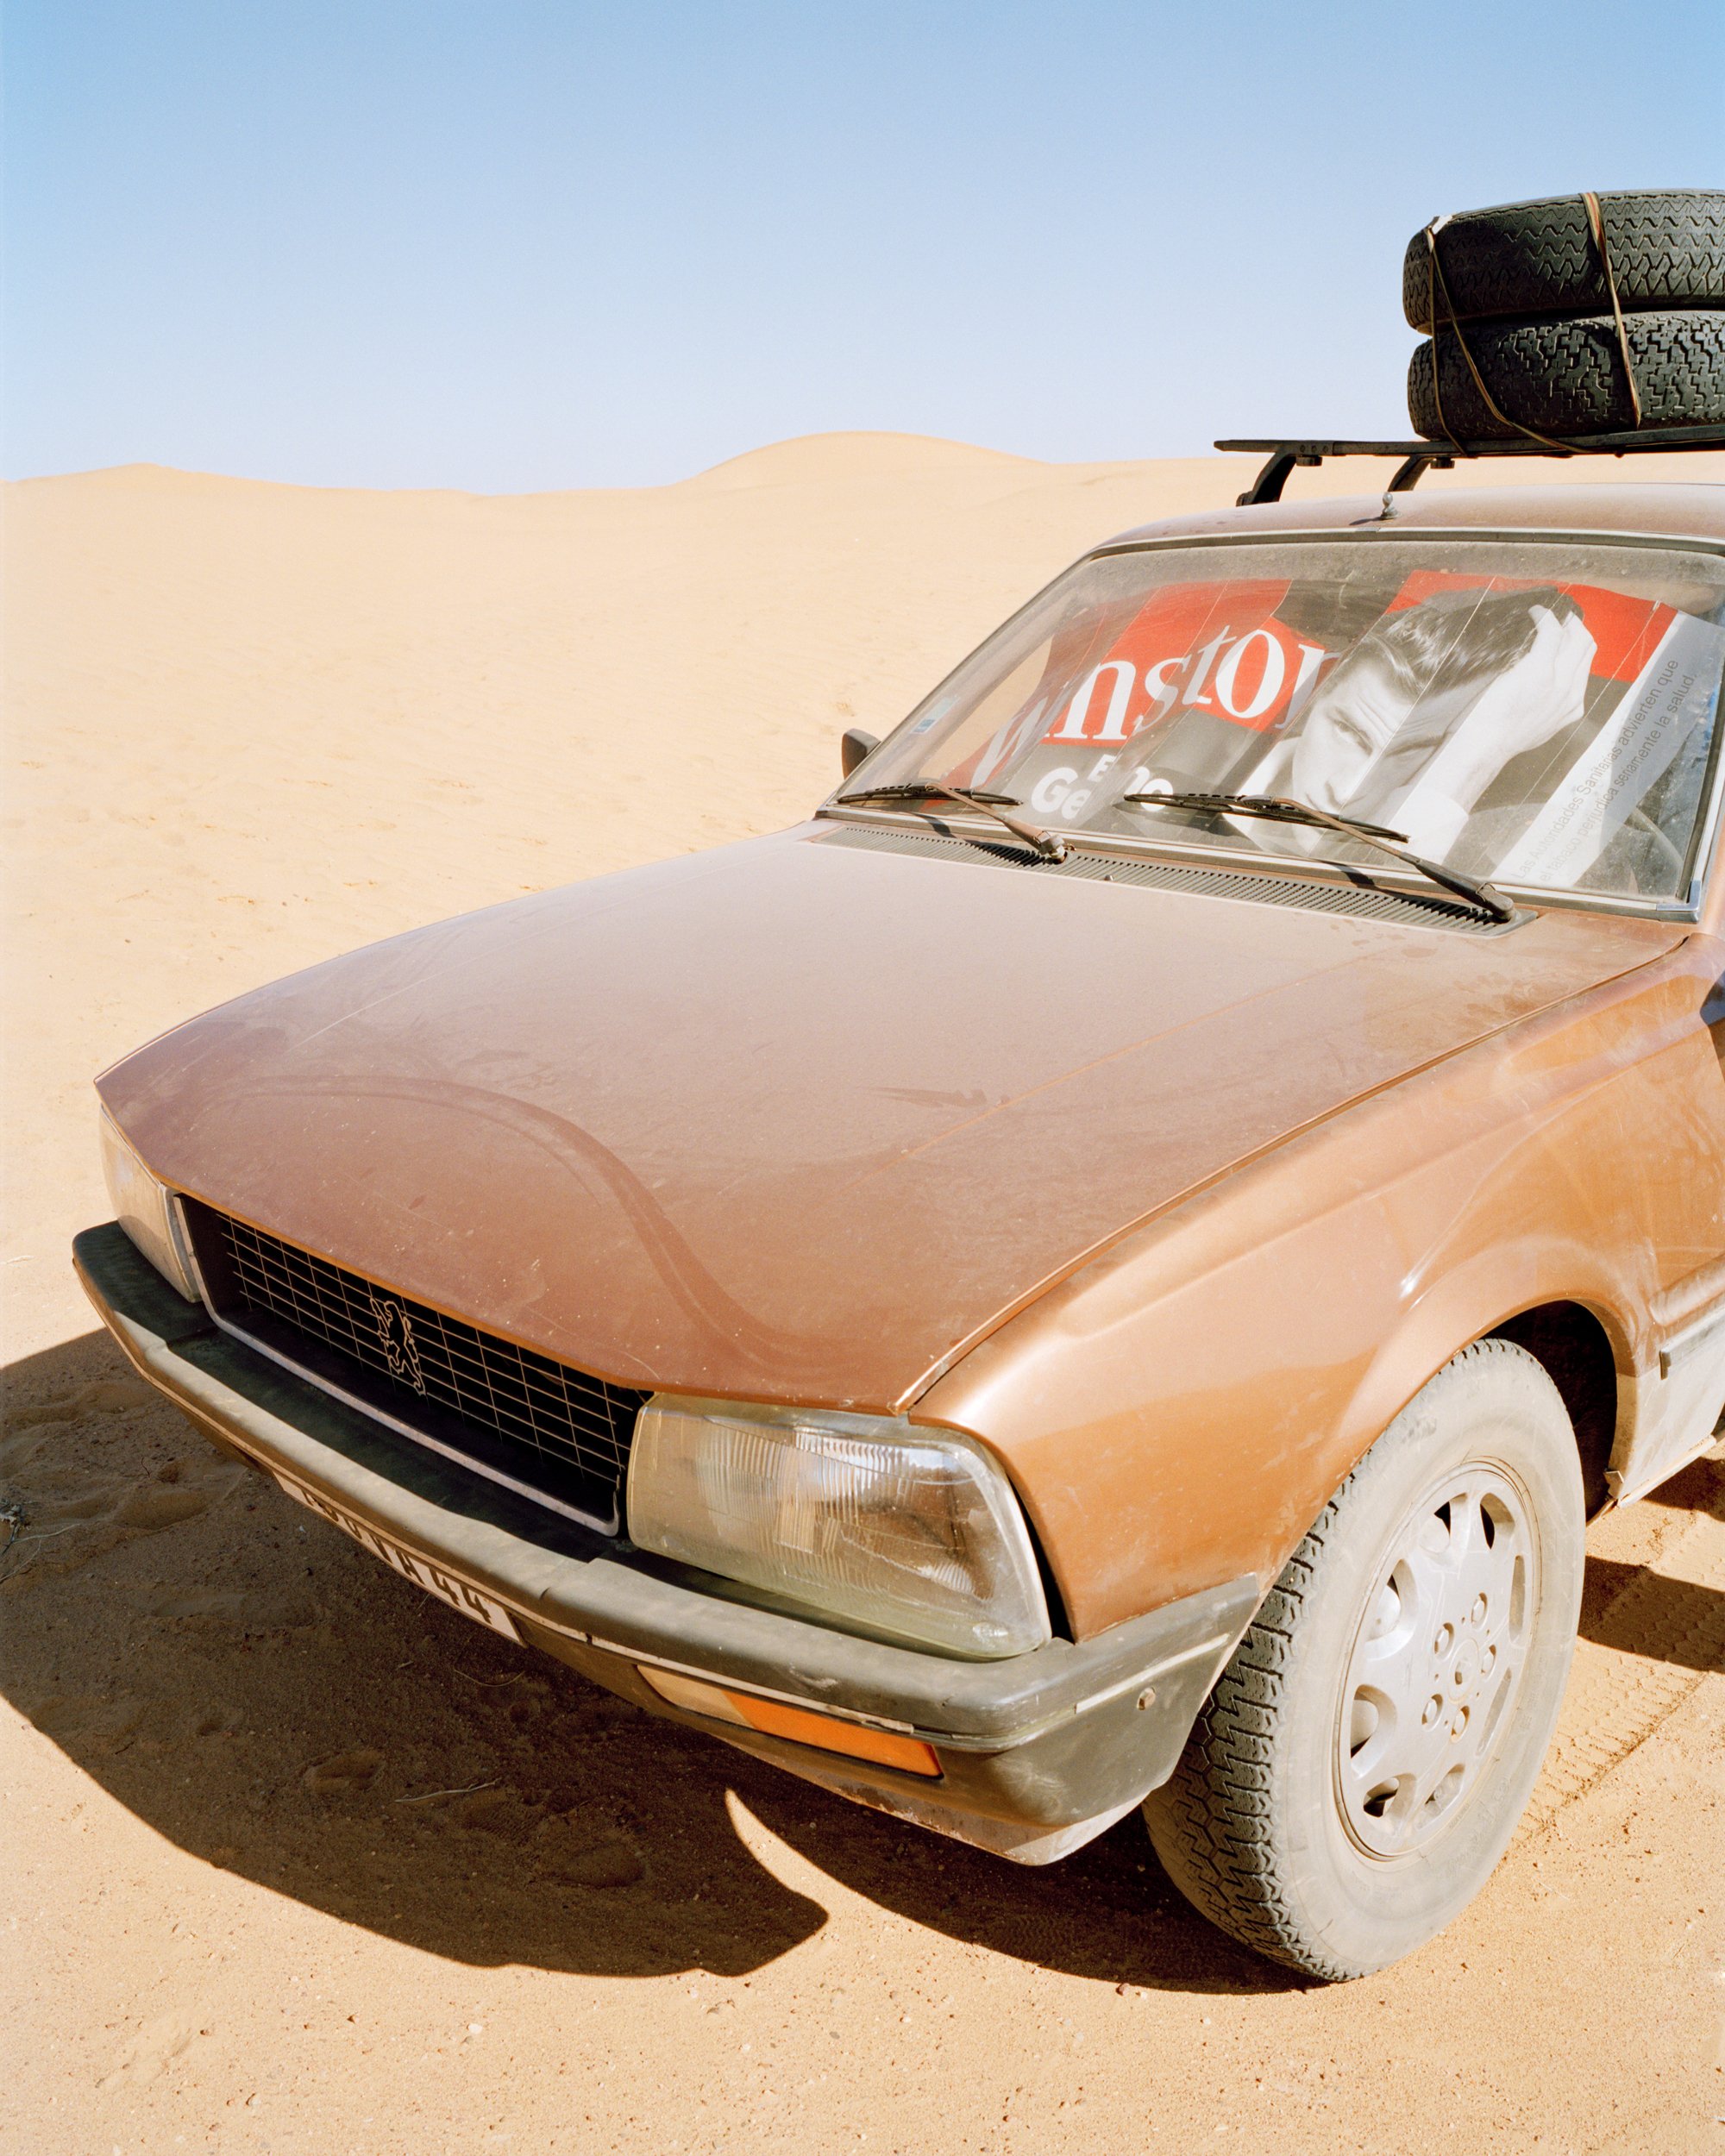 SAHARA DESERT//MOROCCO